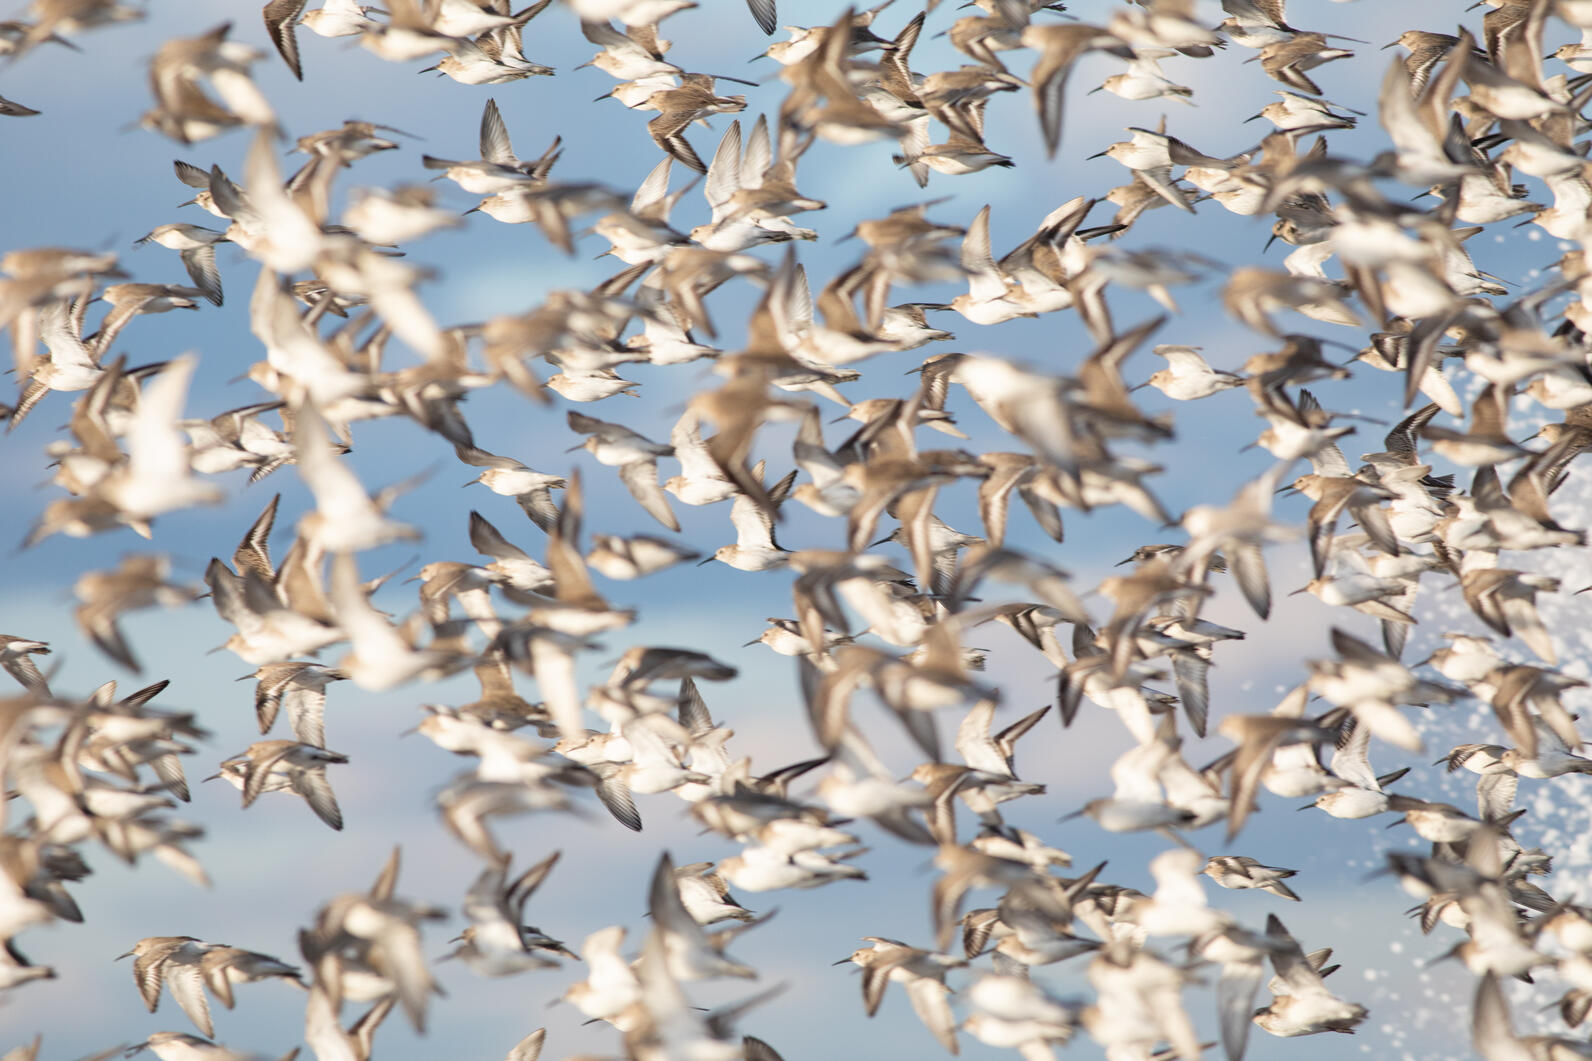 A flock of shorebirds.